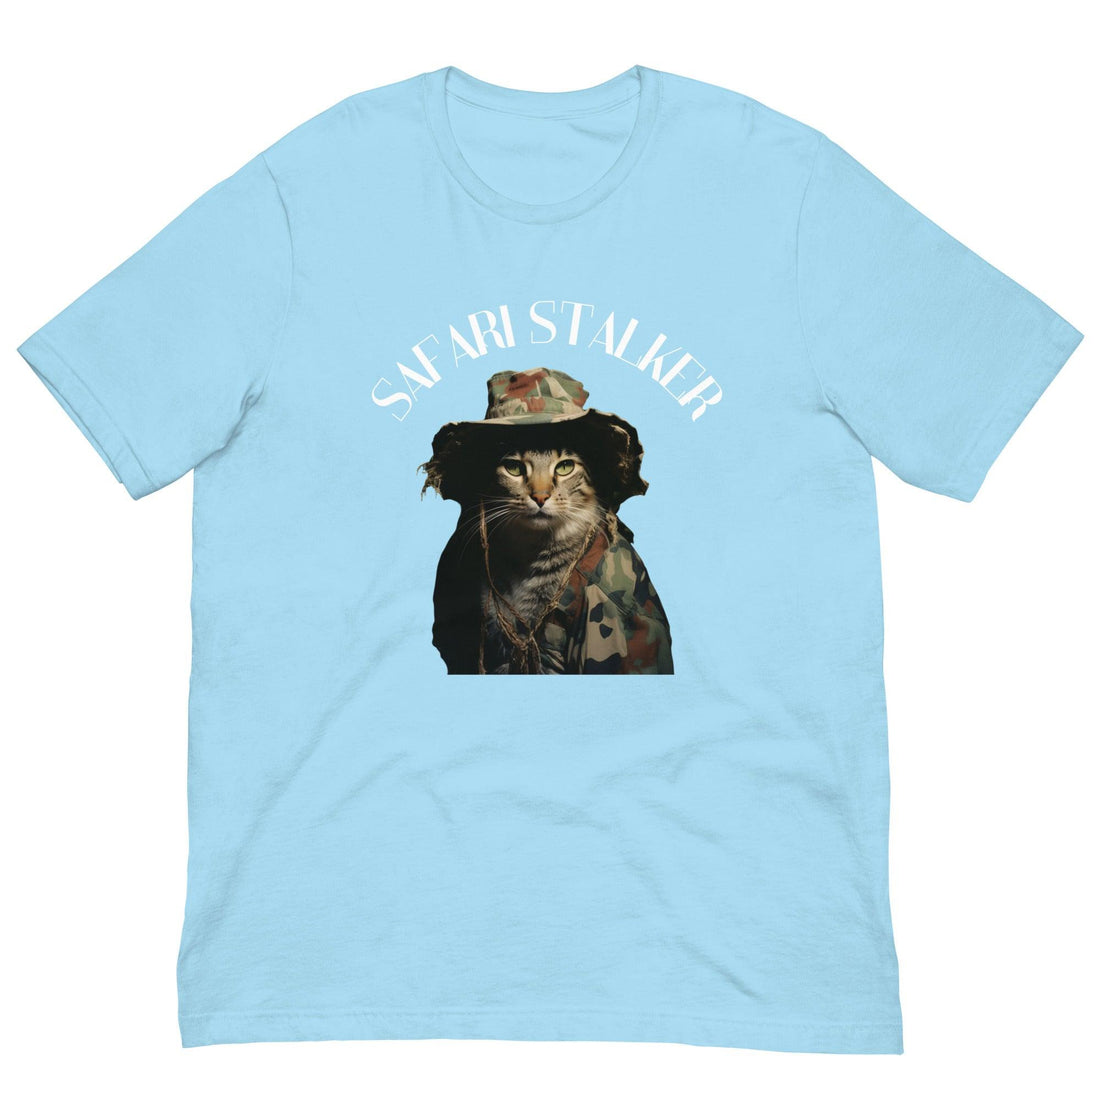 Safari Stalker Cat Shirt - Cat Shirts USA